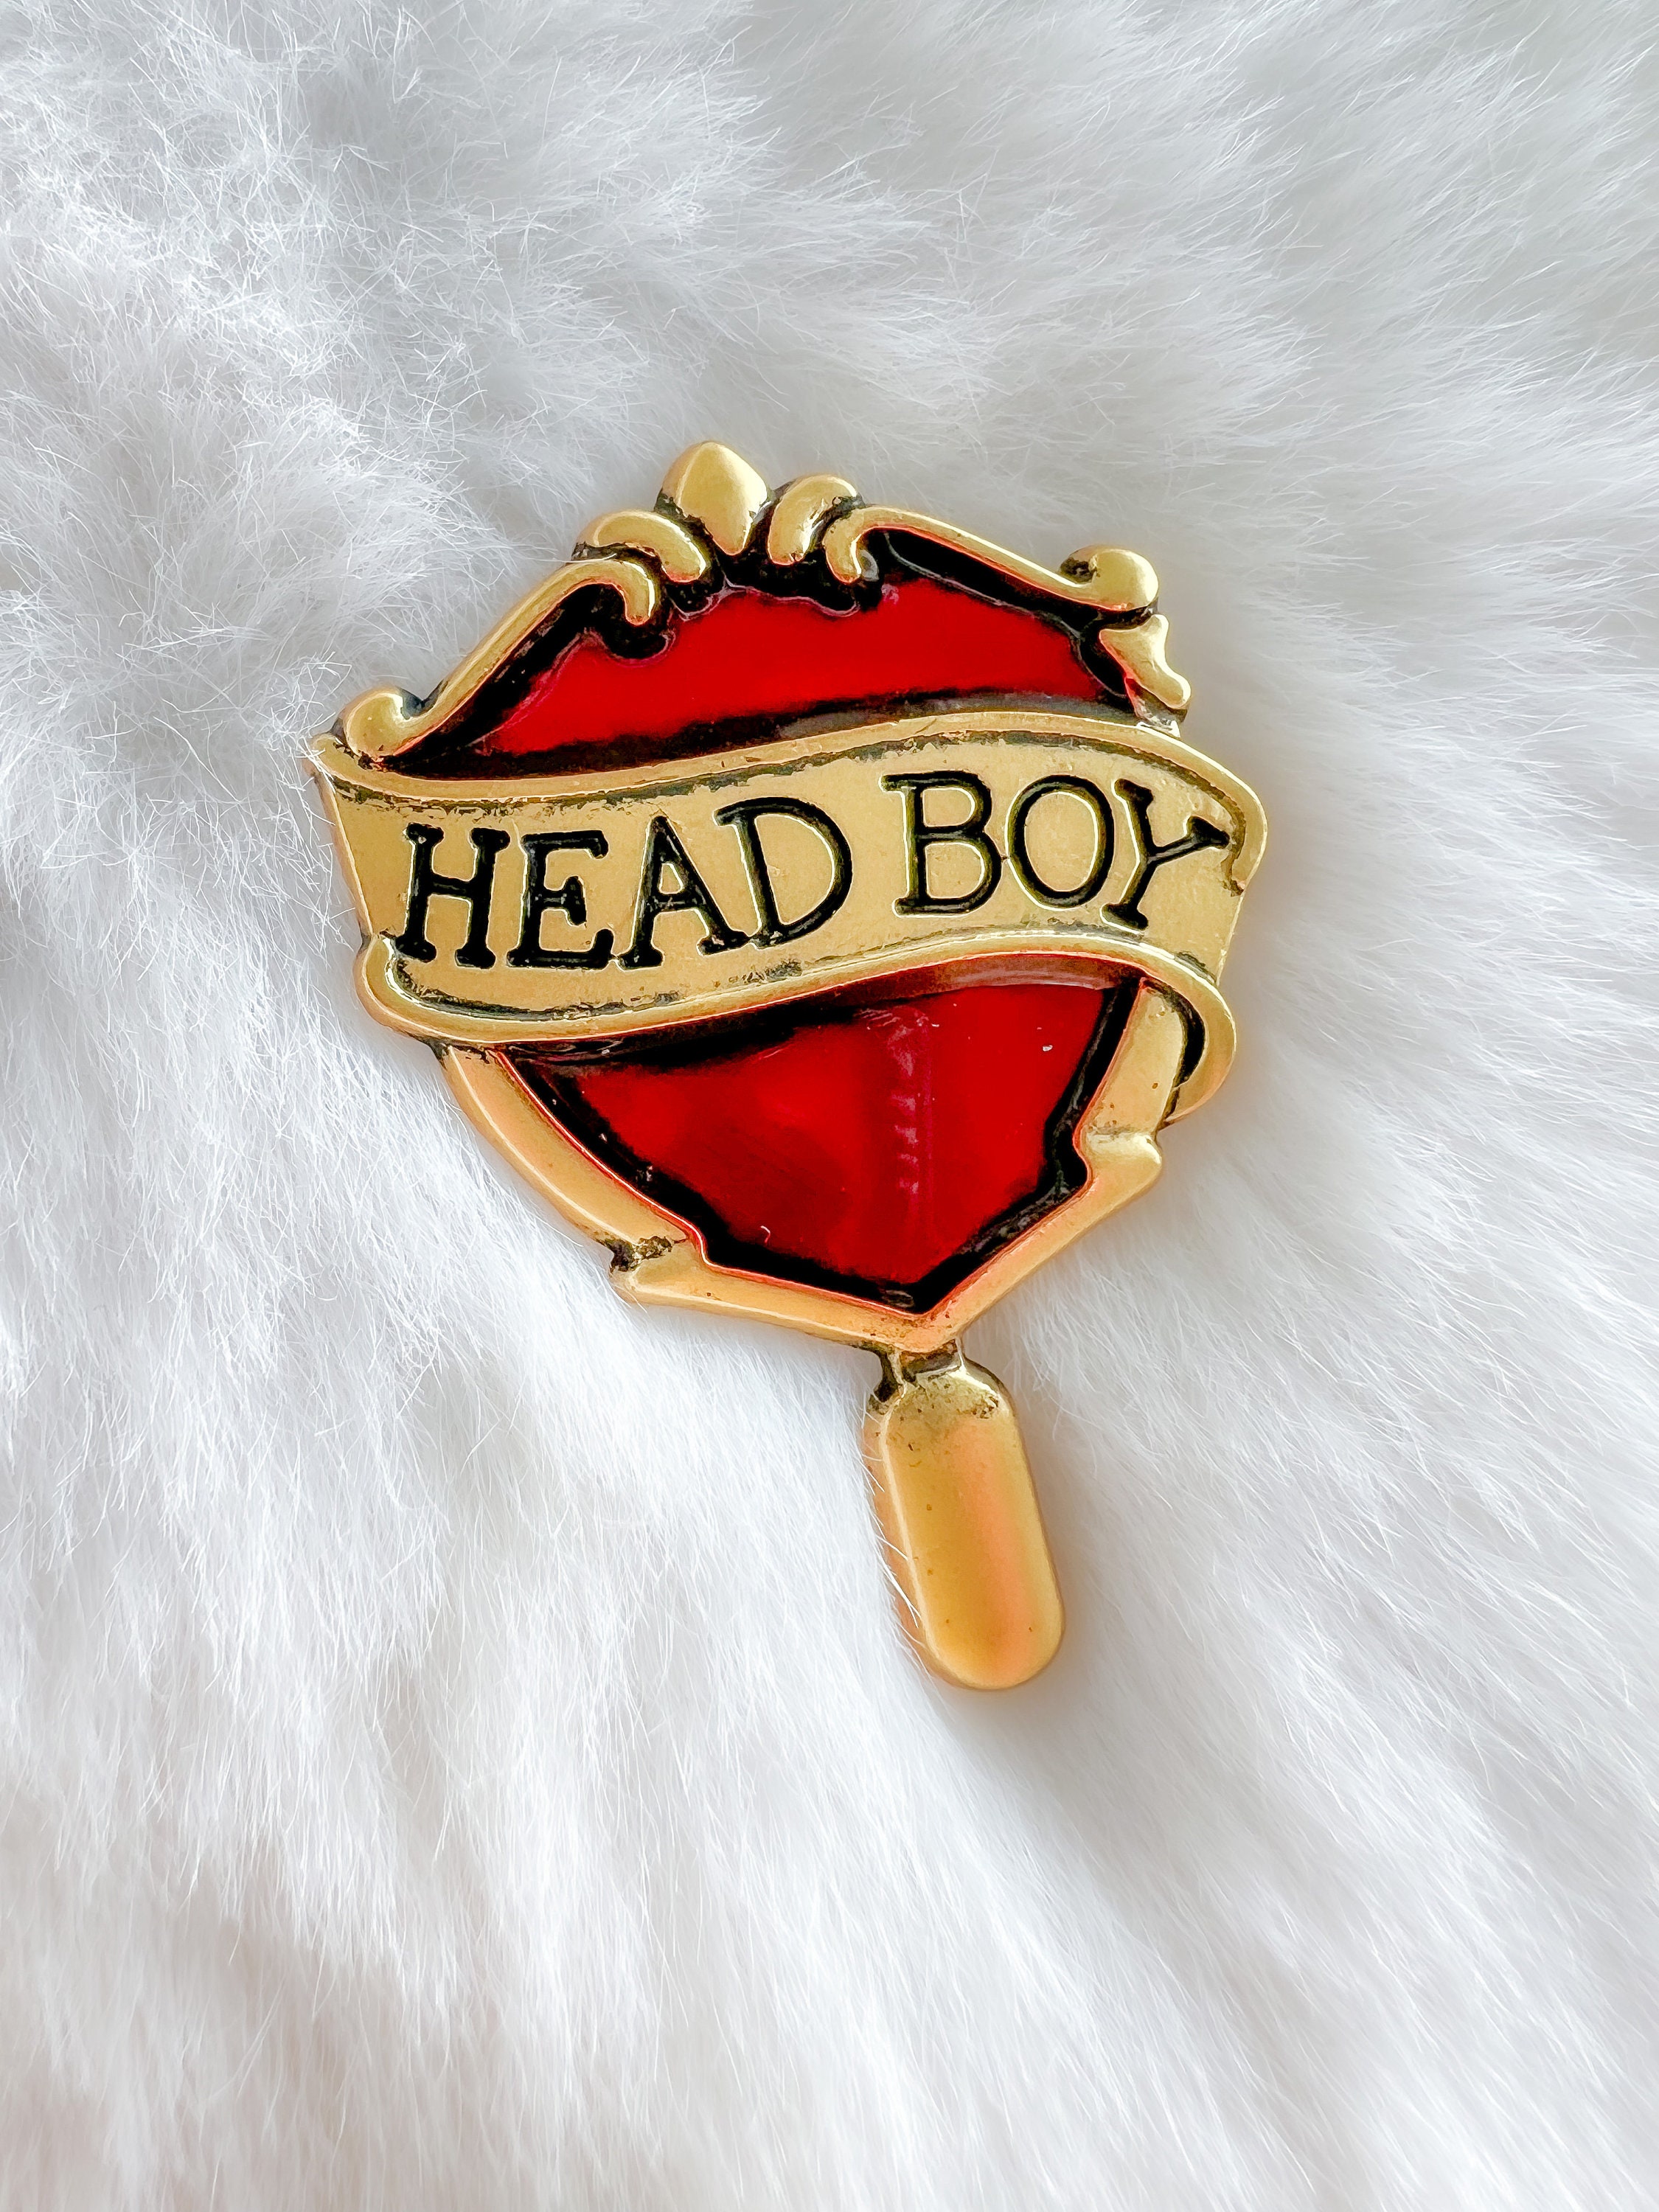 Ravenclaw Head Boy Pin